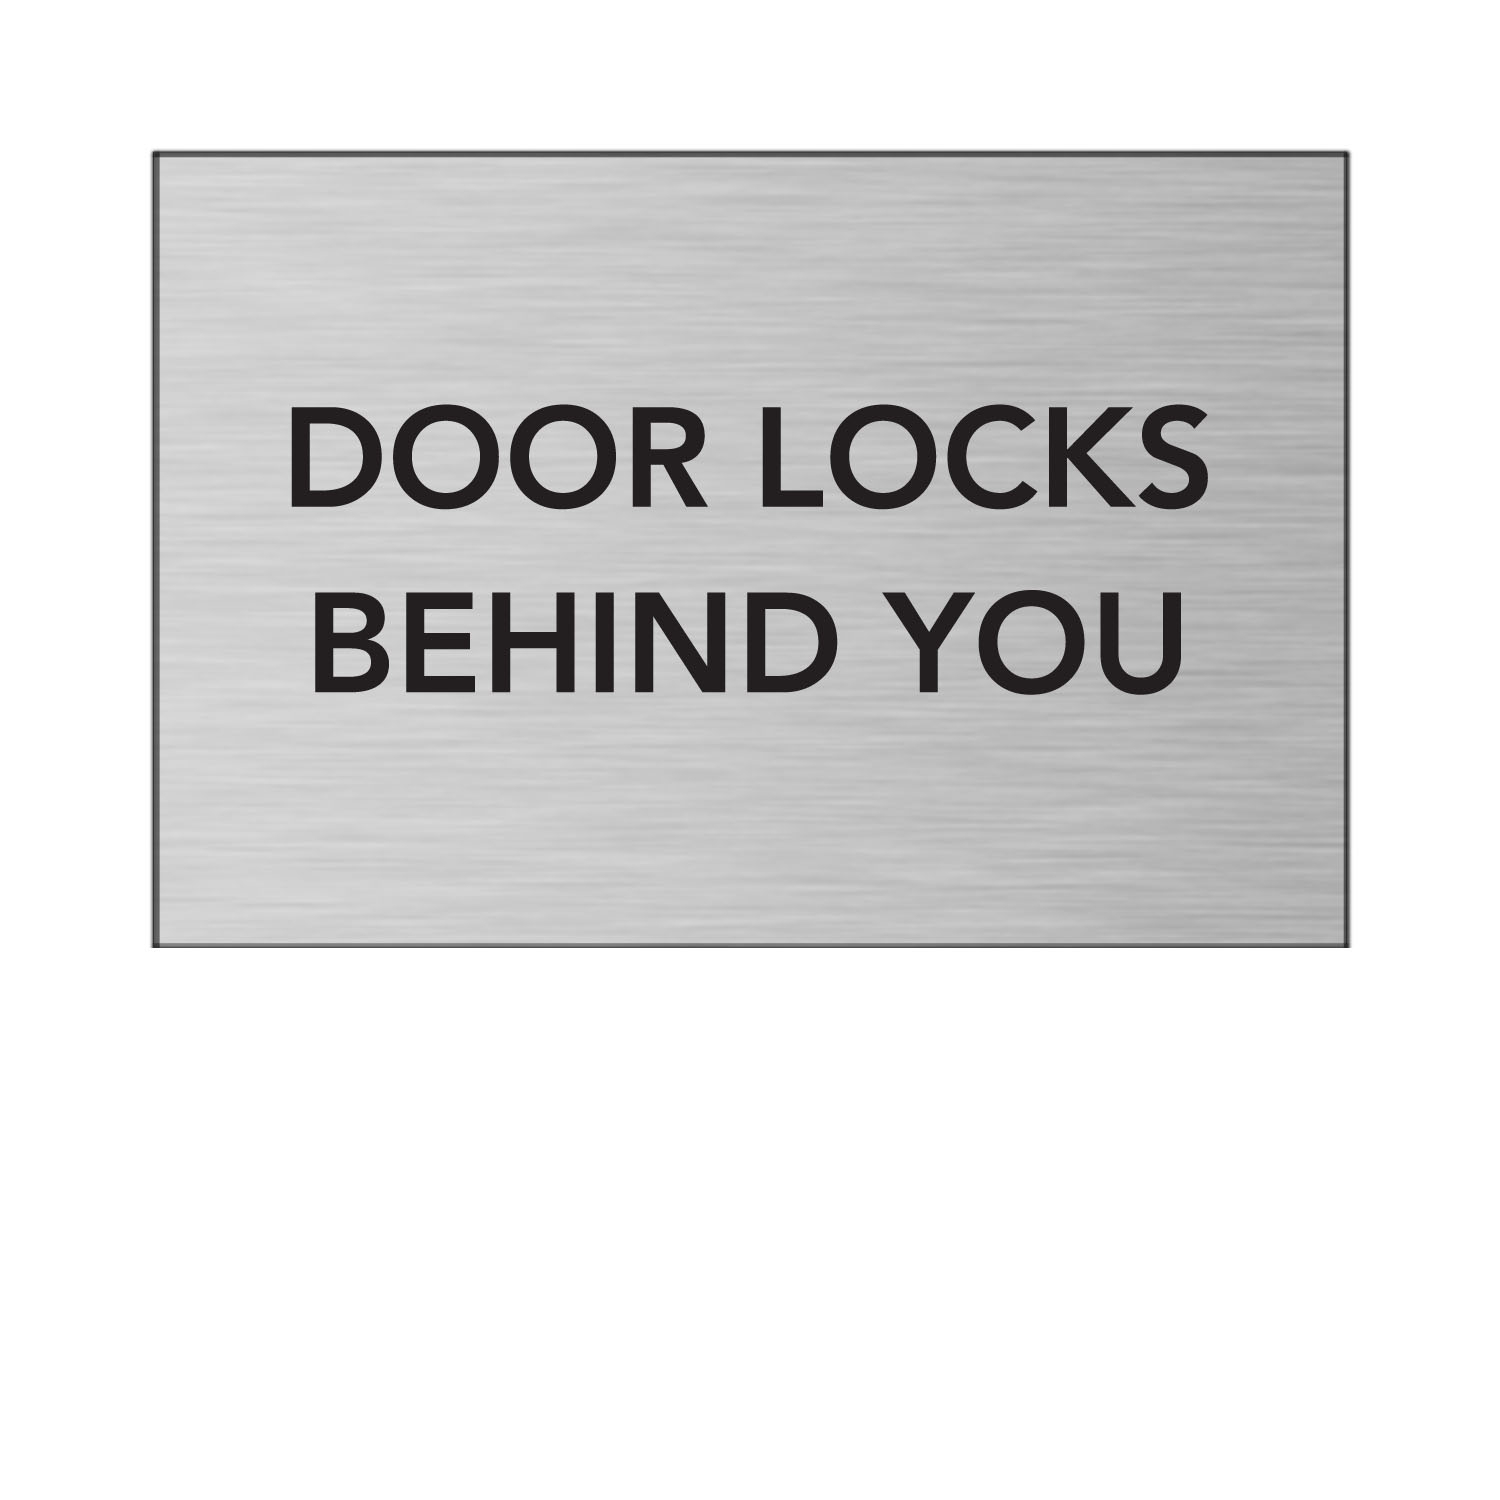 Door Locks Behind You - Epic Signs